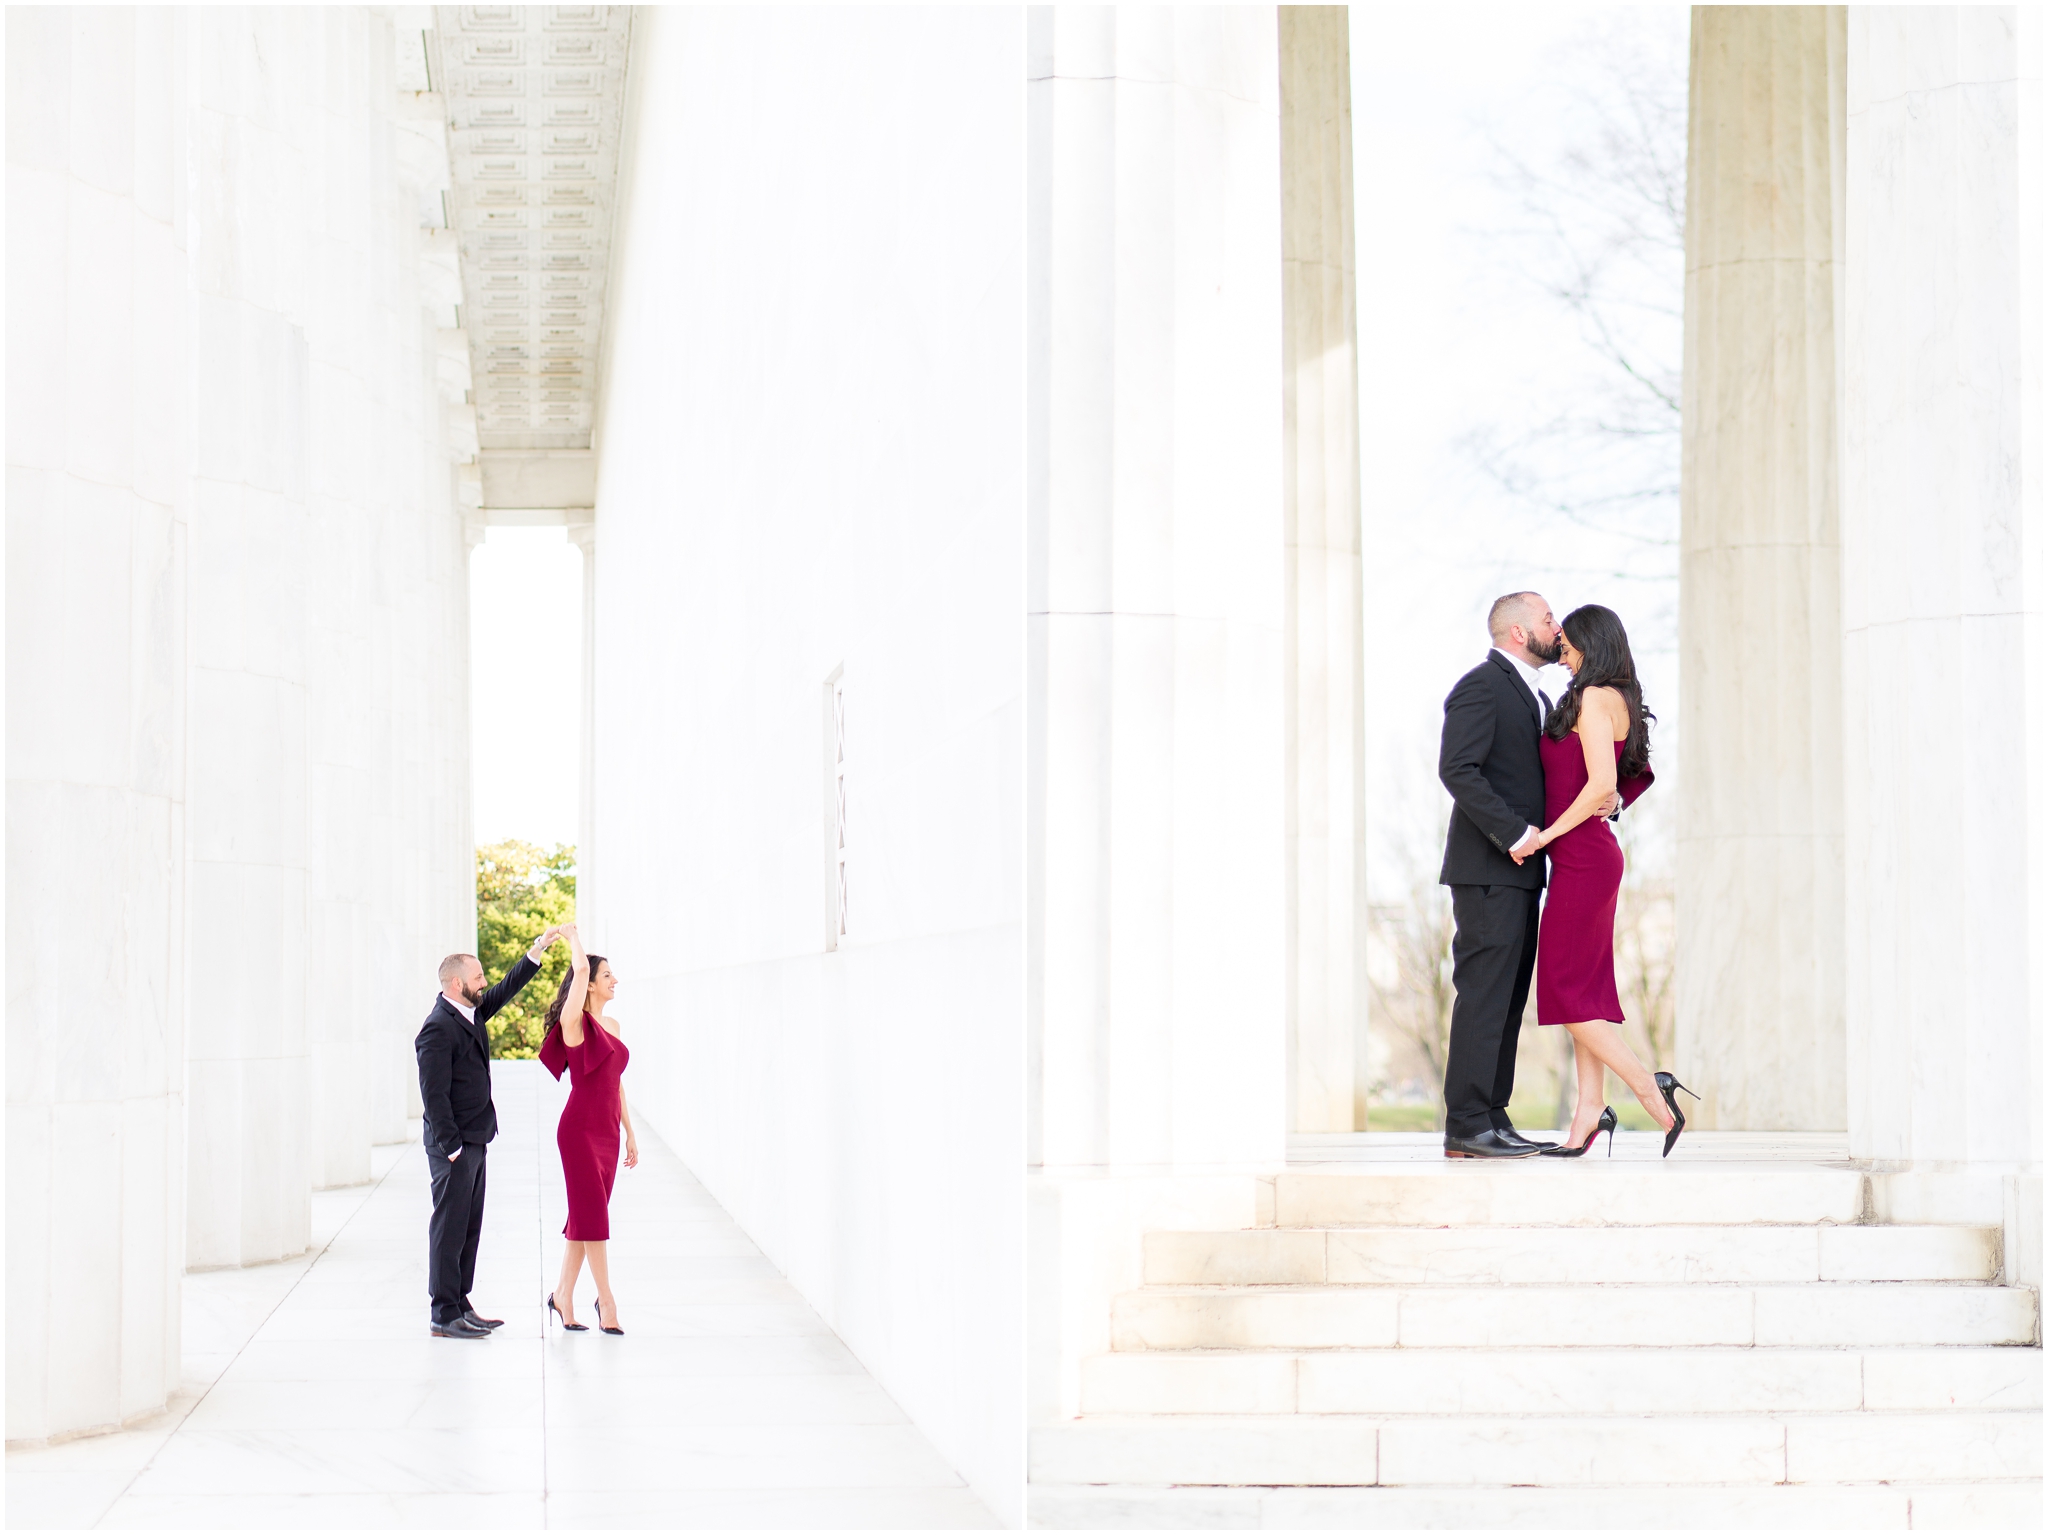 Lincoln Memorial engagement photos in Washington DC